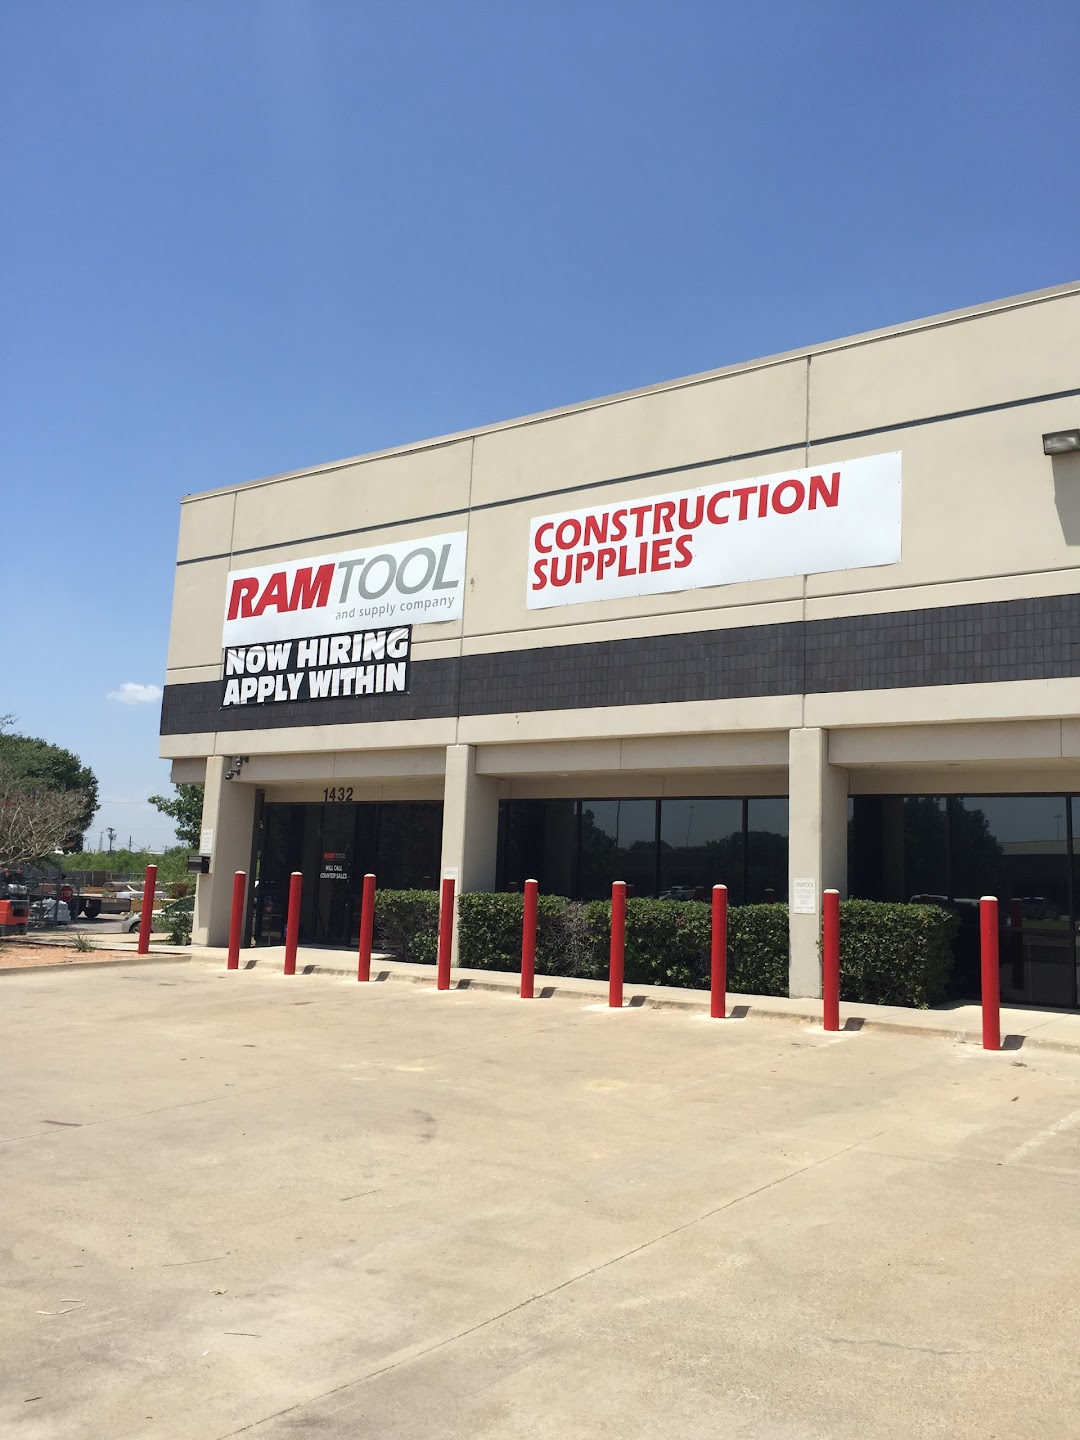 Ram Tool Construction Supply Co.